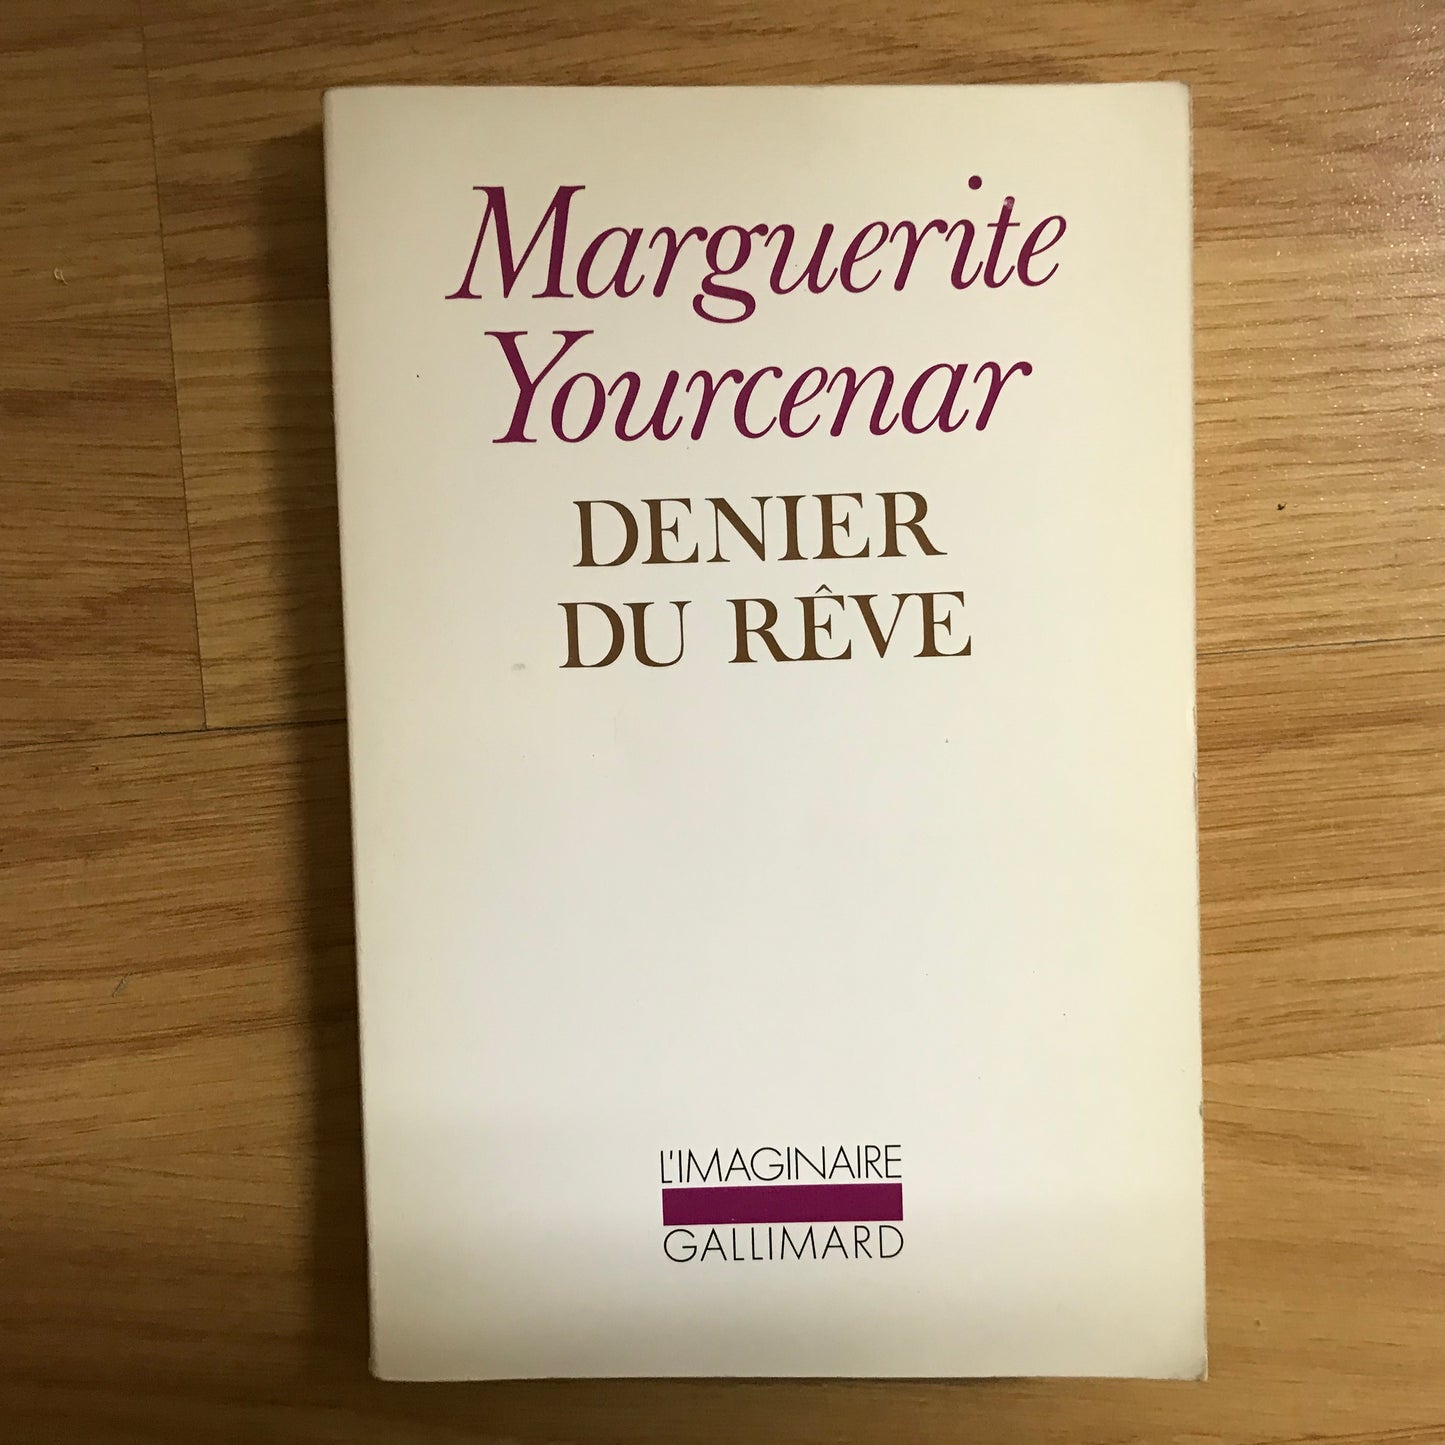 Yourcenar, Marguerite - Dernier du rêve